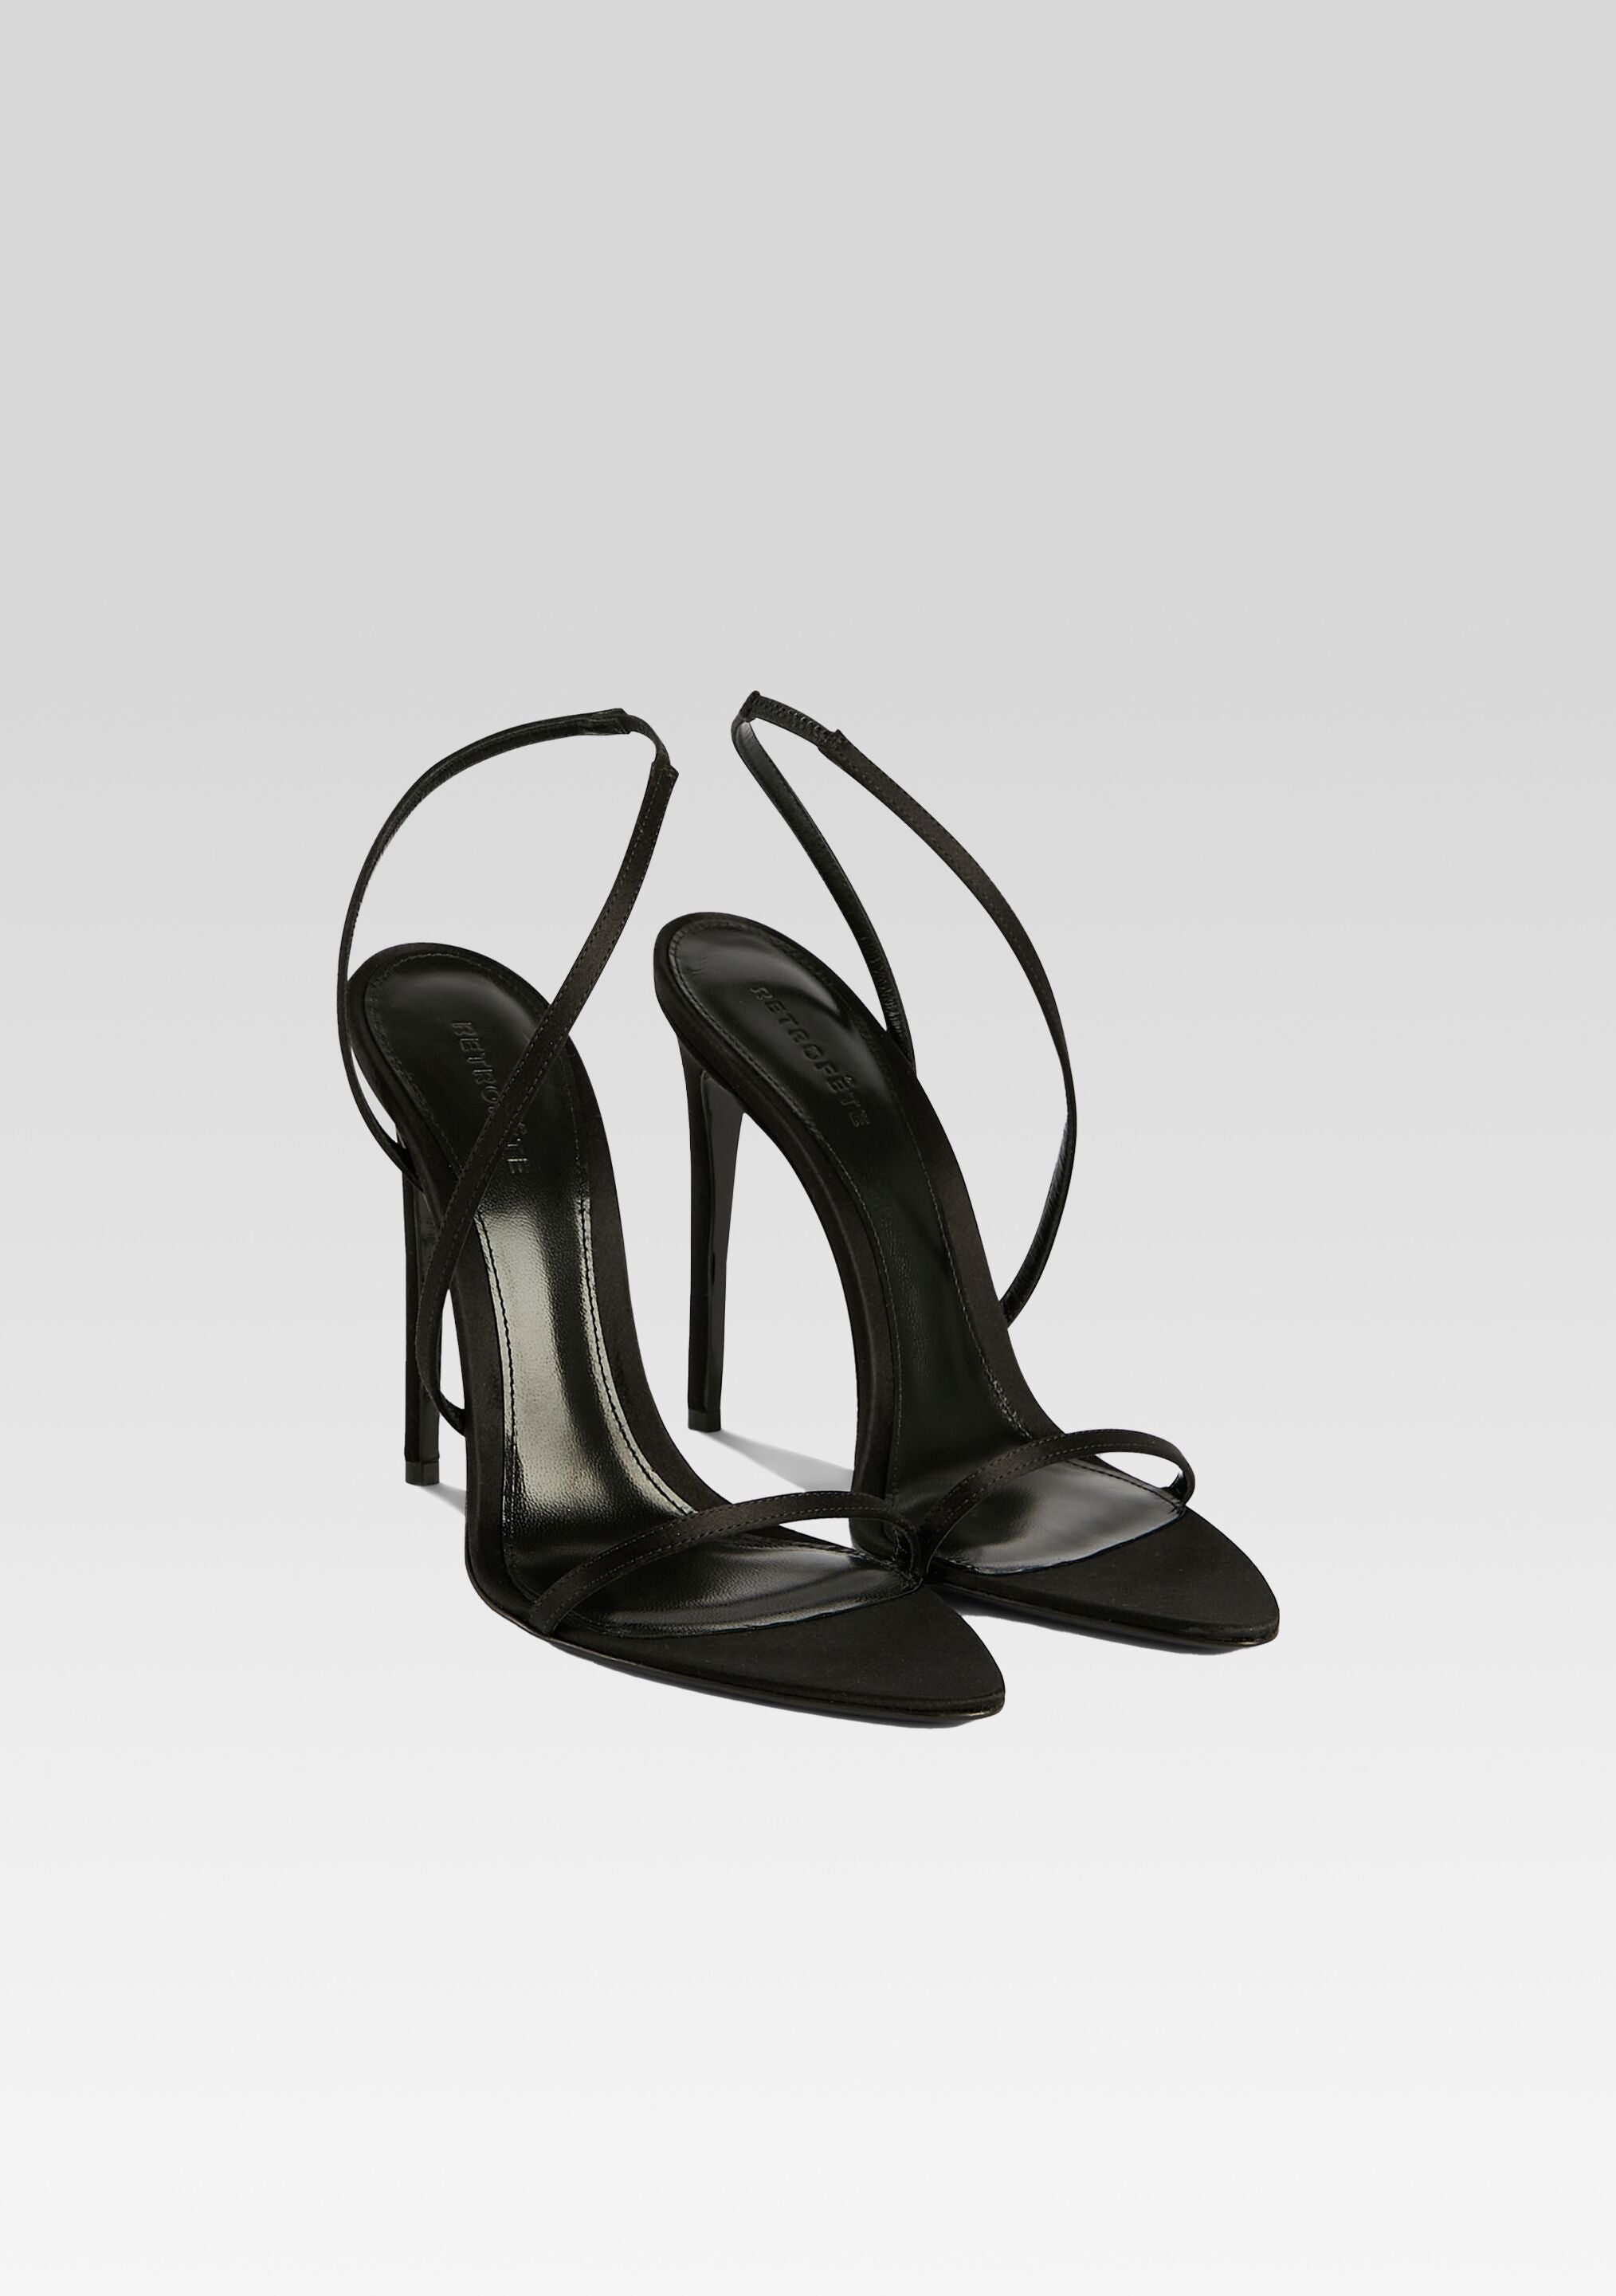 Split Mignon Multi-Strap Heel: Women's Designer Sandals | Tory Burch